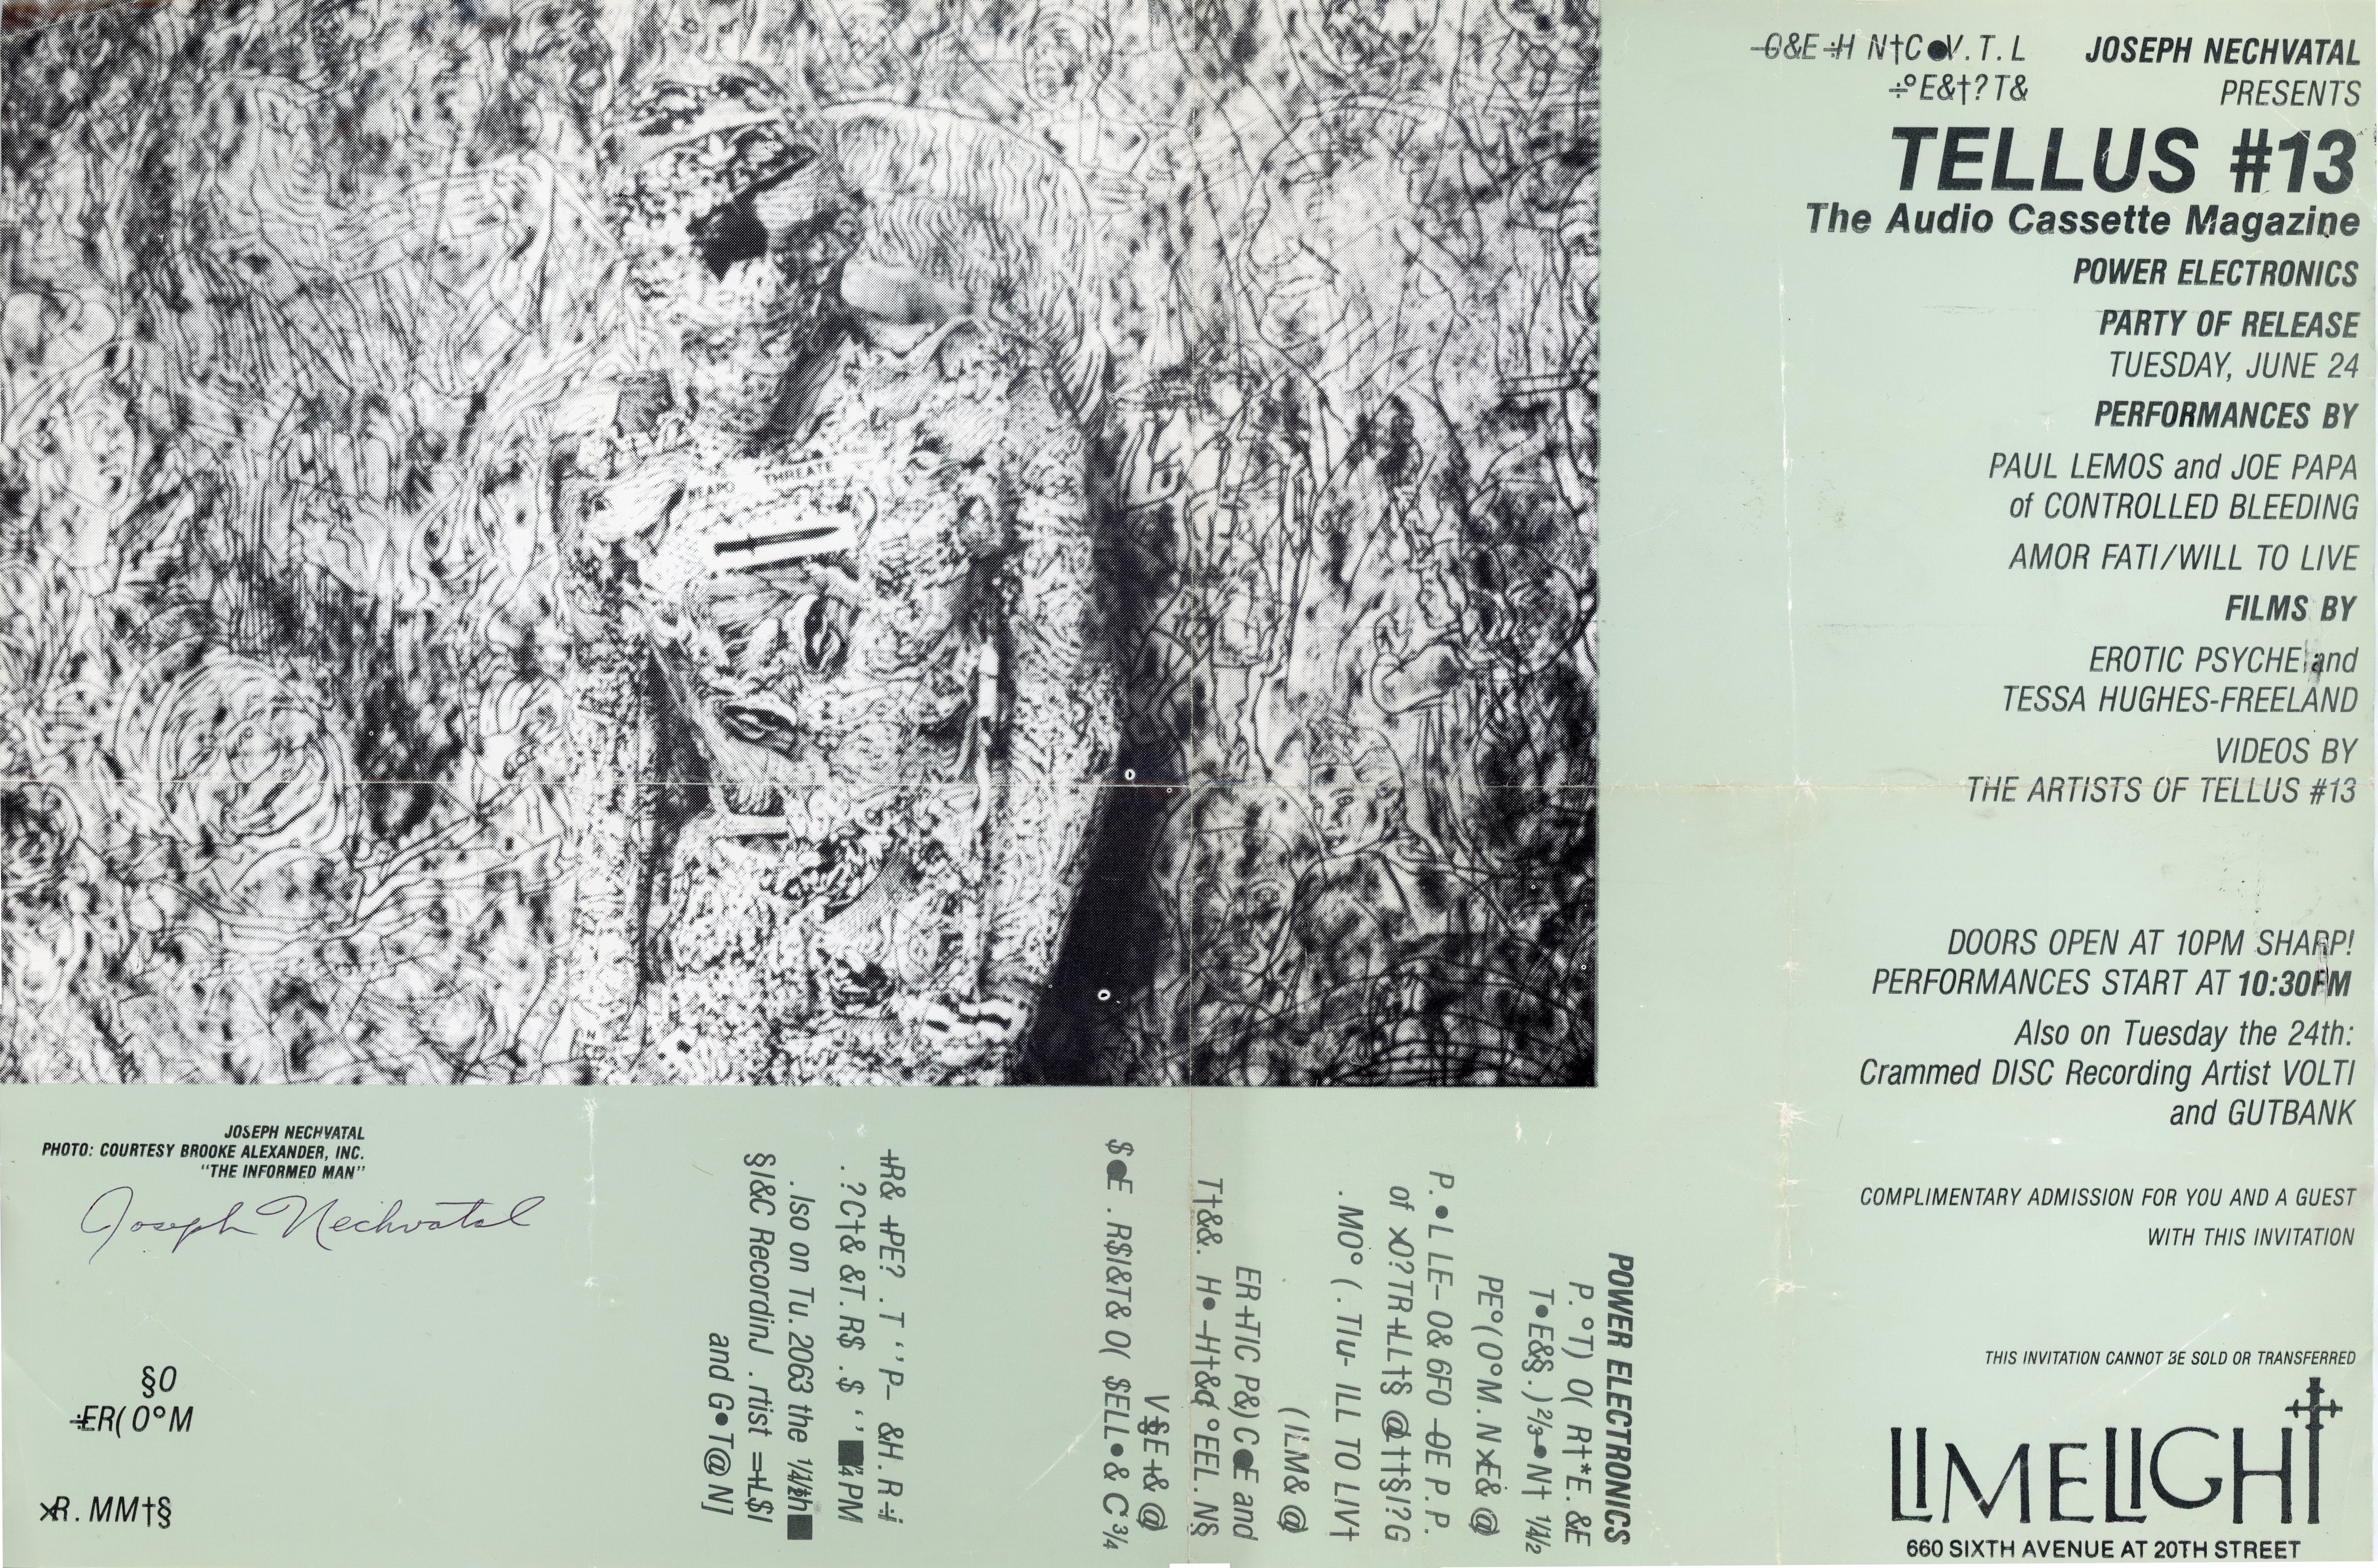 Gallery 98  Joseph Nechvatal presents TELLUS Issue #13 Launch